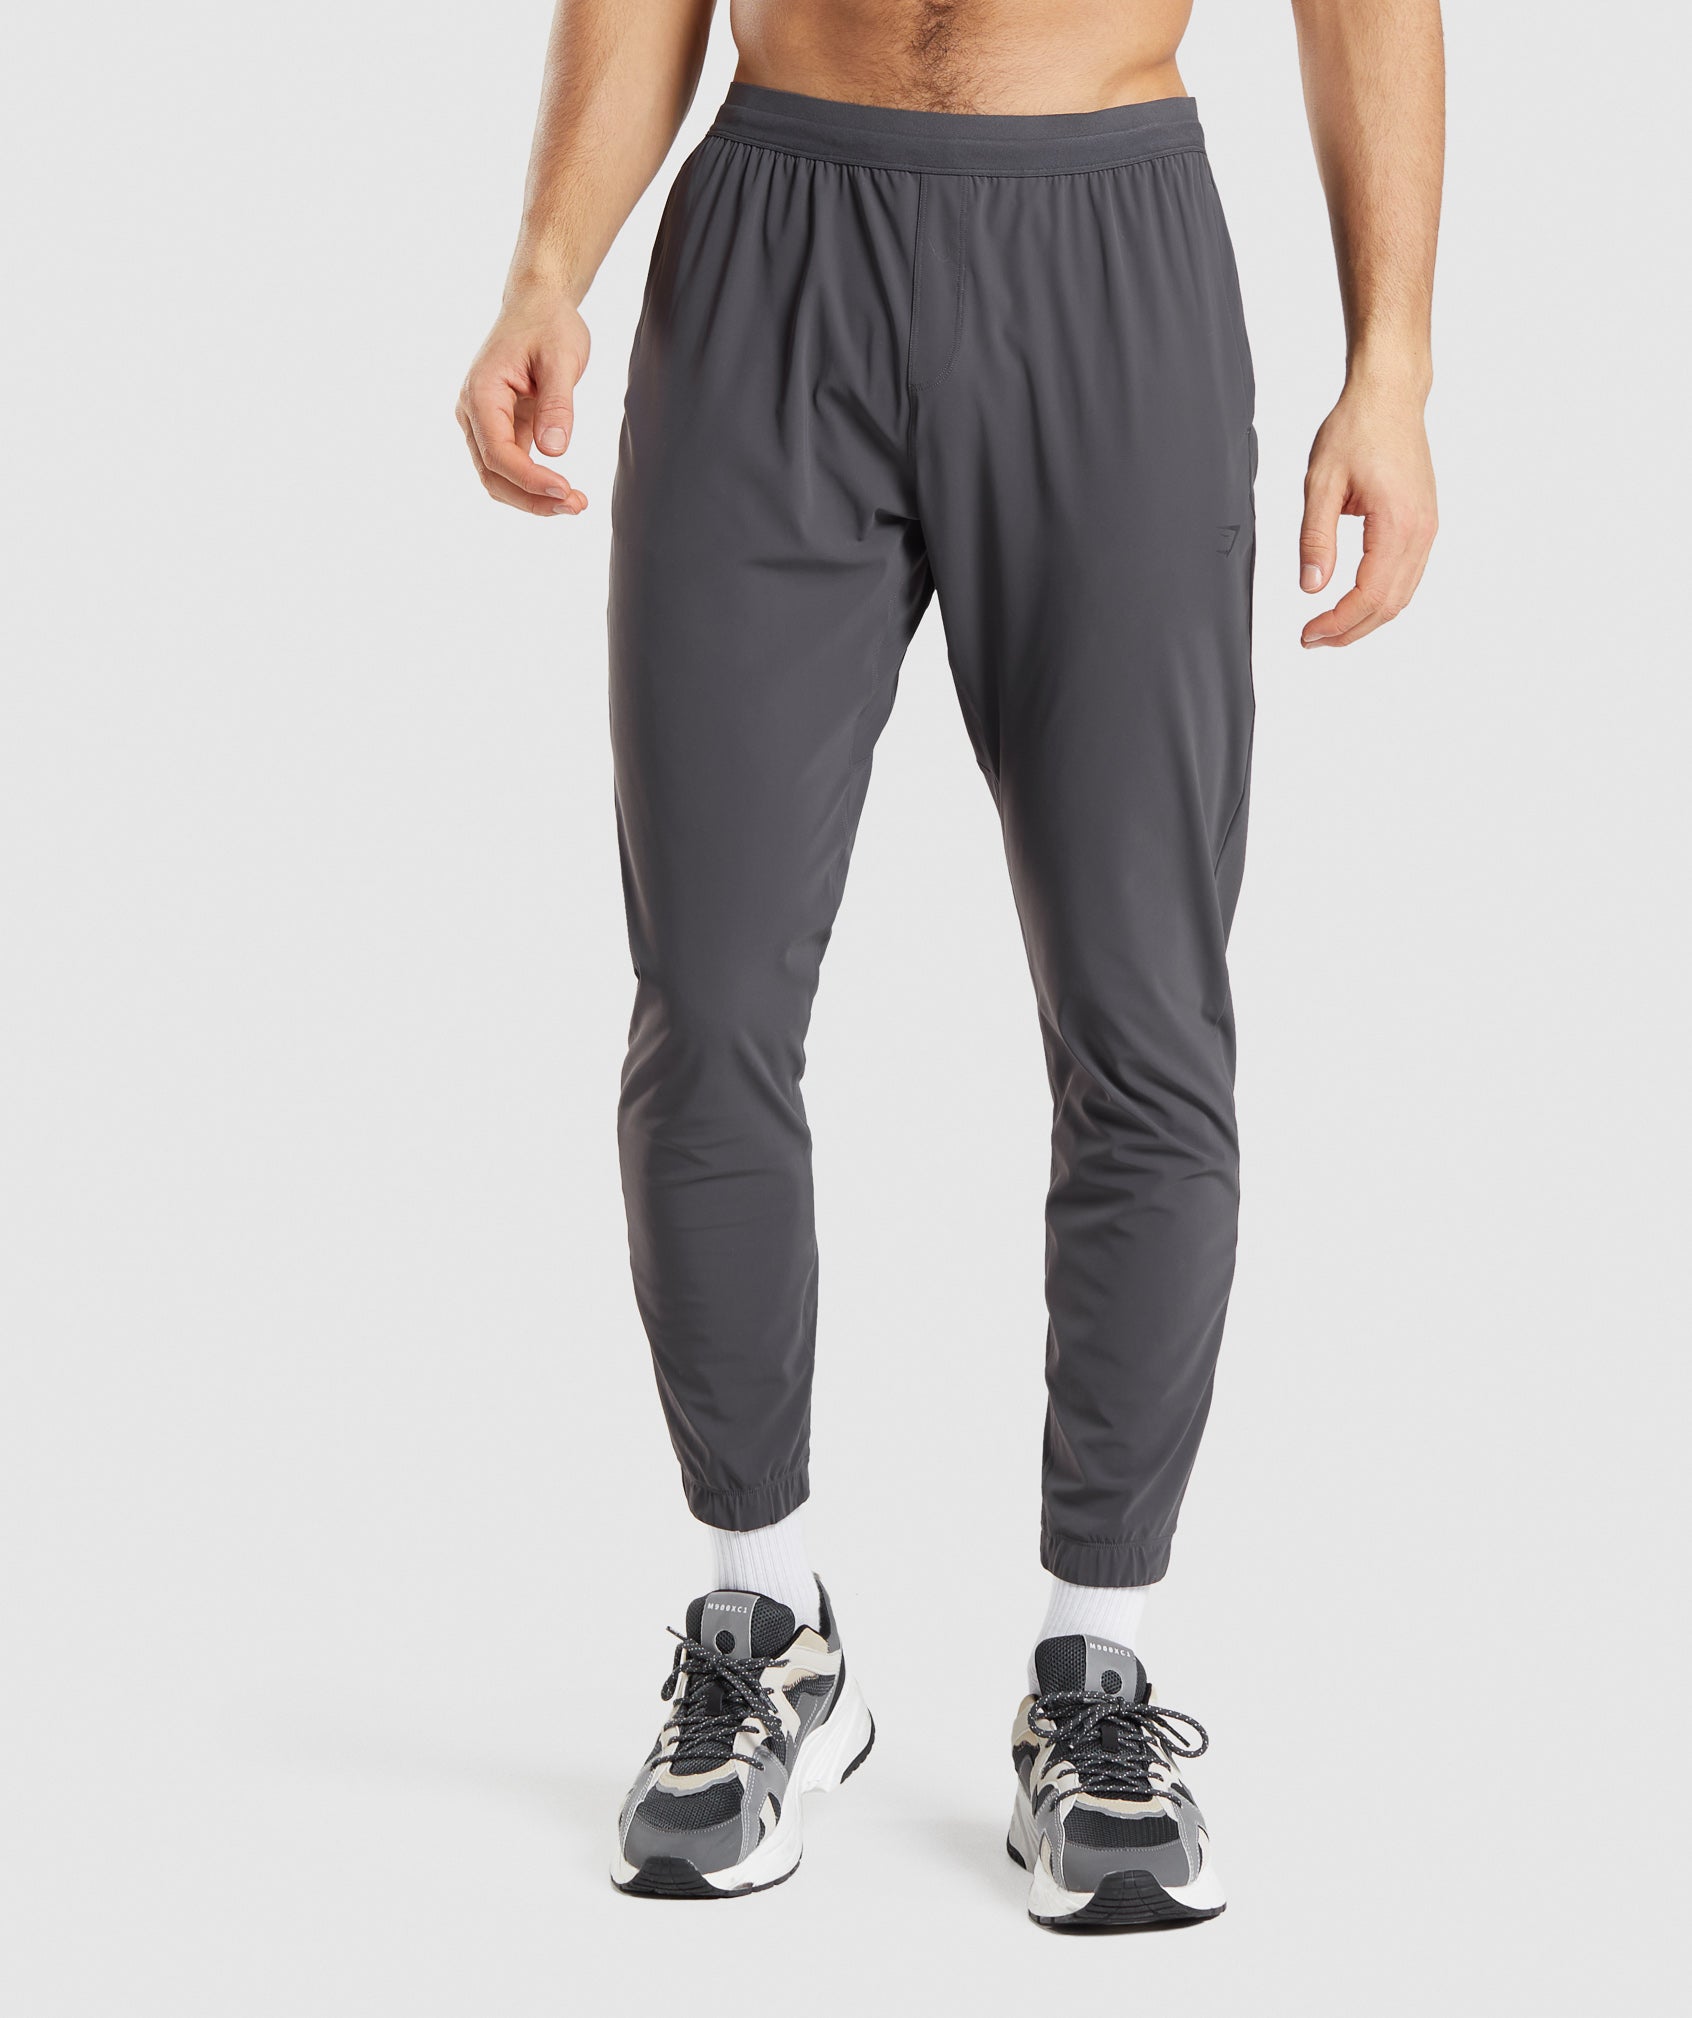 HSMQHJWE Gymshark Men Half Stripe Pants Print Fashion Men'S Seven-Point  Casual Sweatpants Digital Summer Men'S Pants Little L 